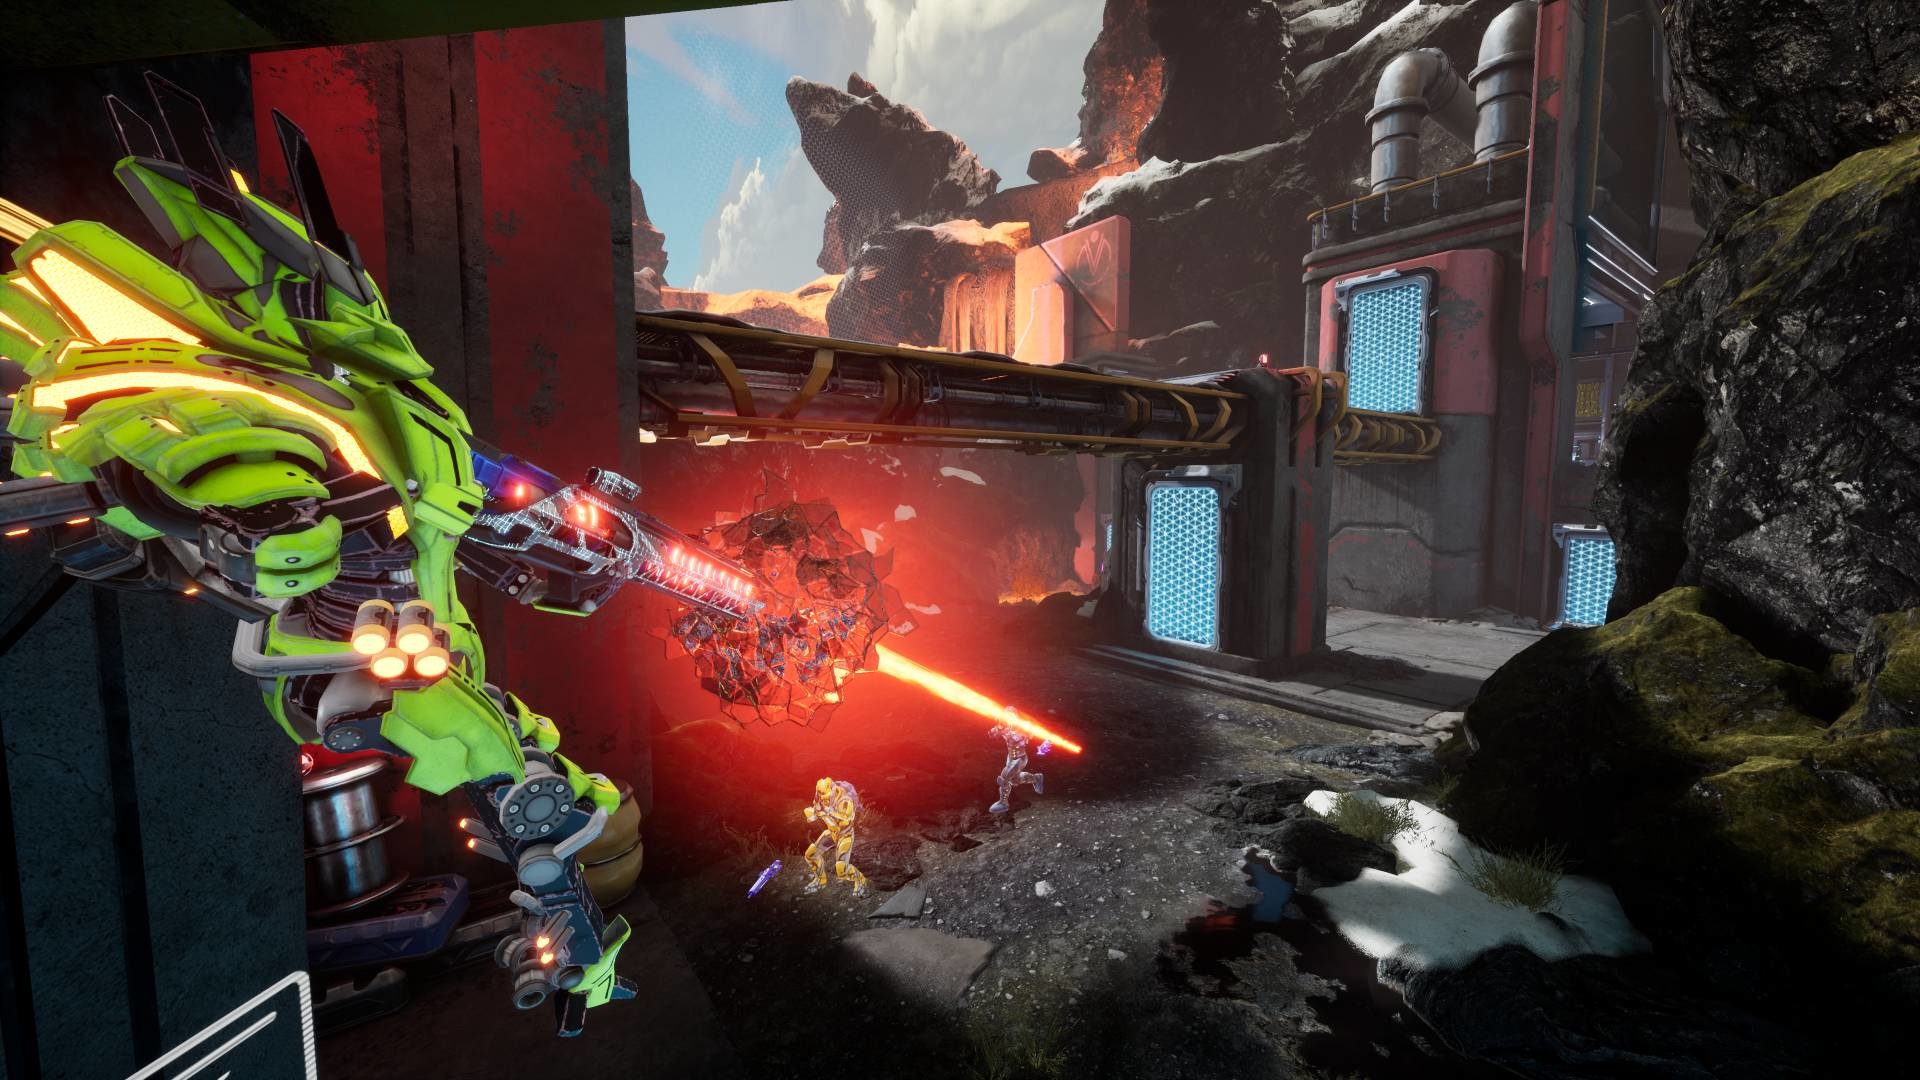 Sci-fi multiplayer FPS Splitgate: Arena Warfare launches for free